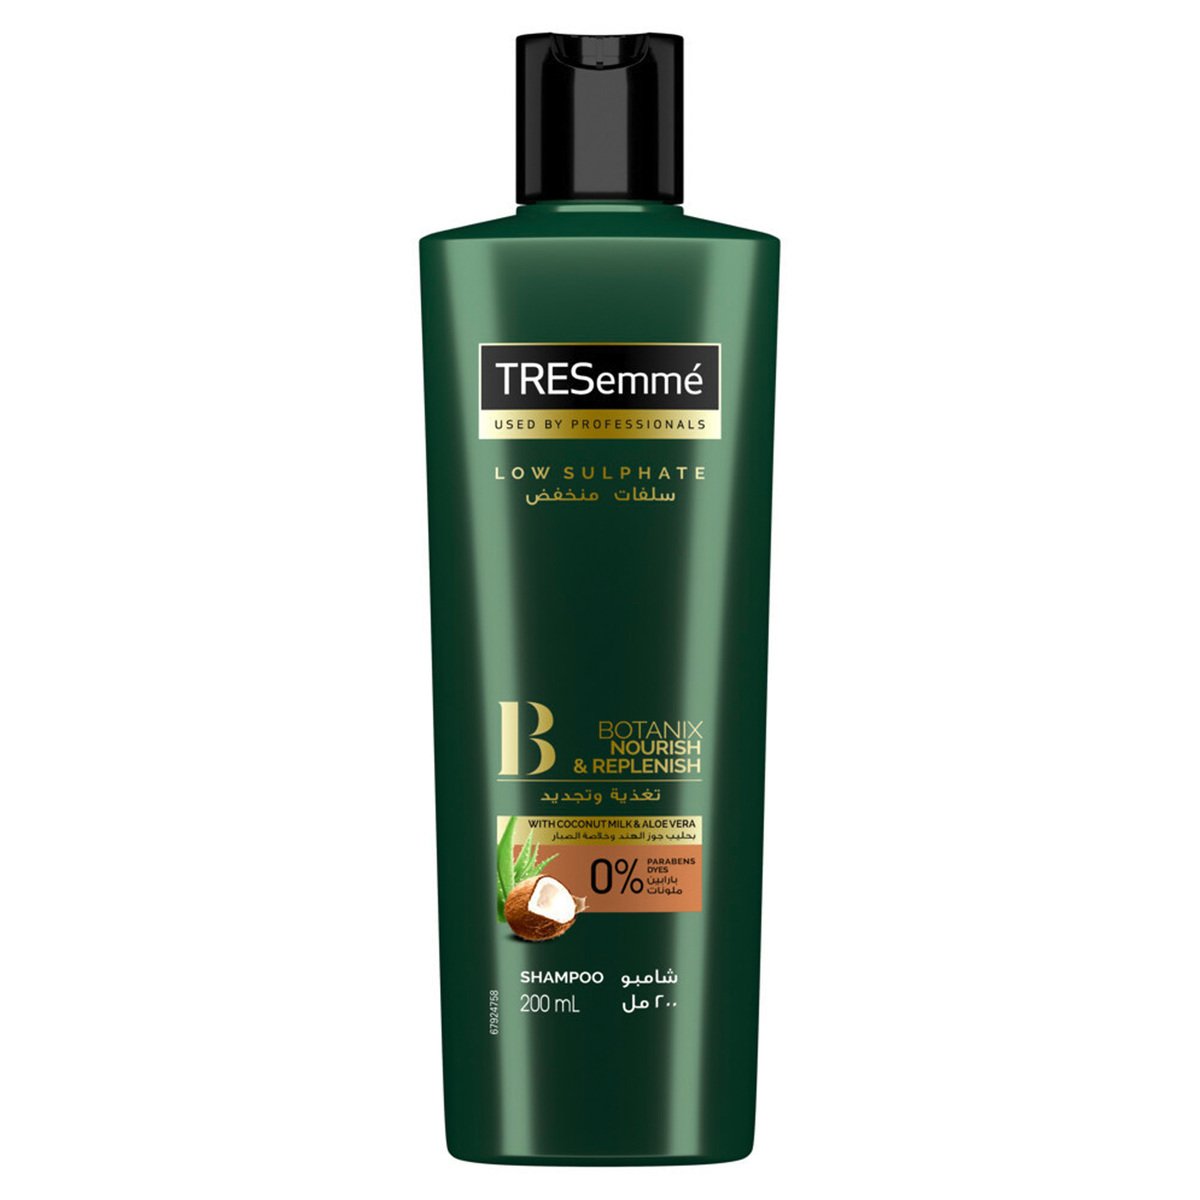 TRESemme Botanix Shampoo Nourish & Replenish 200 ml